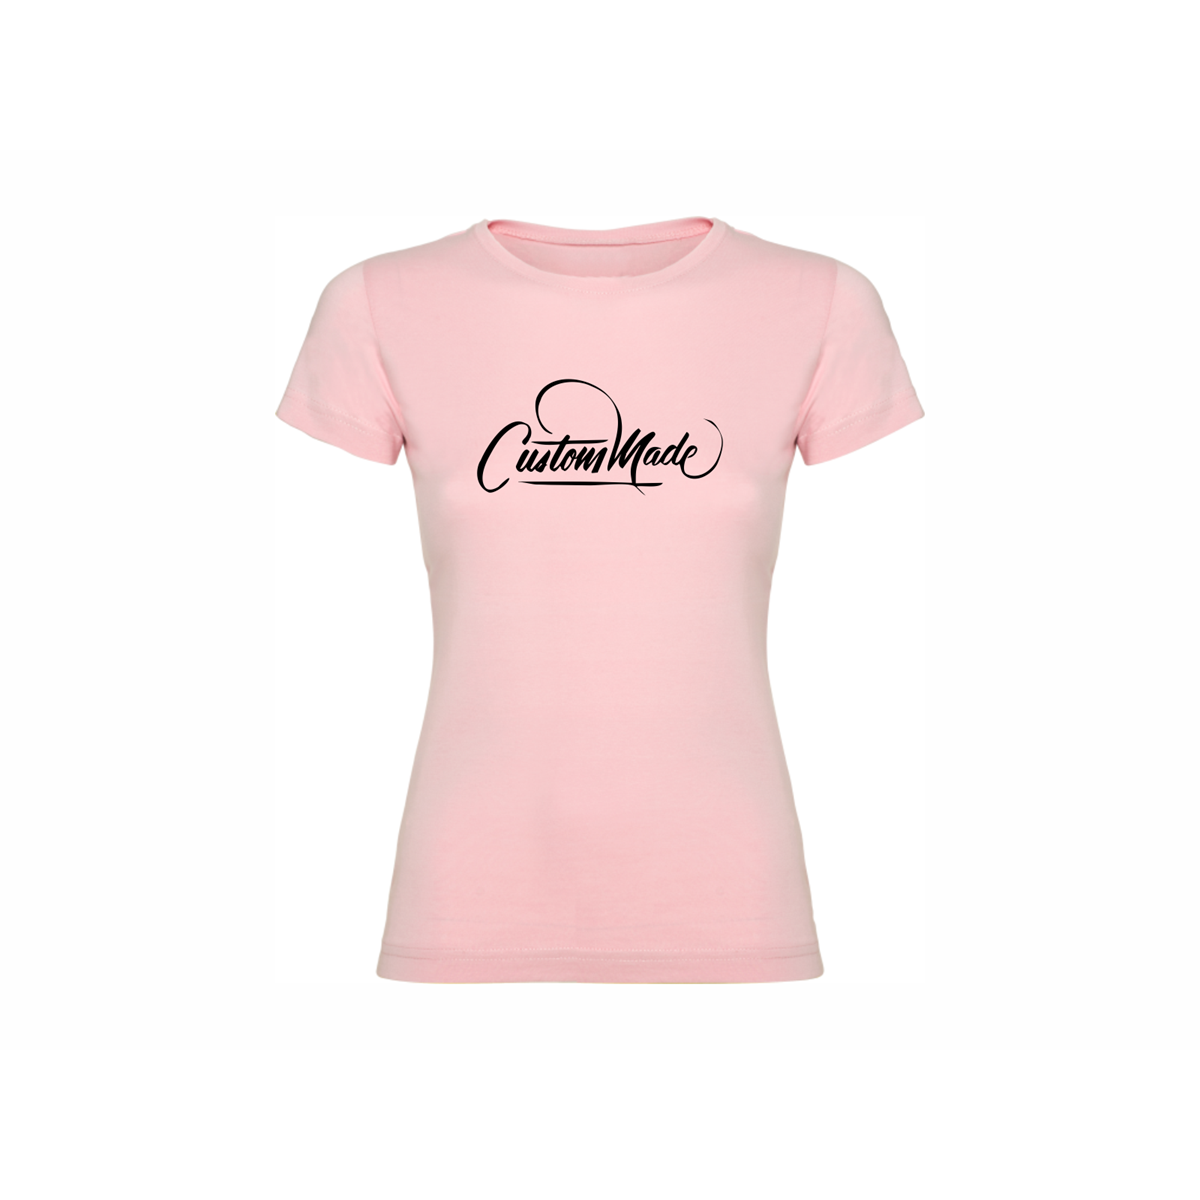 woman t shirt custom made price 12 90 eur women t shirt short sleeves 